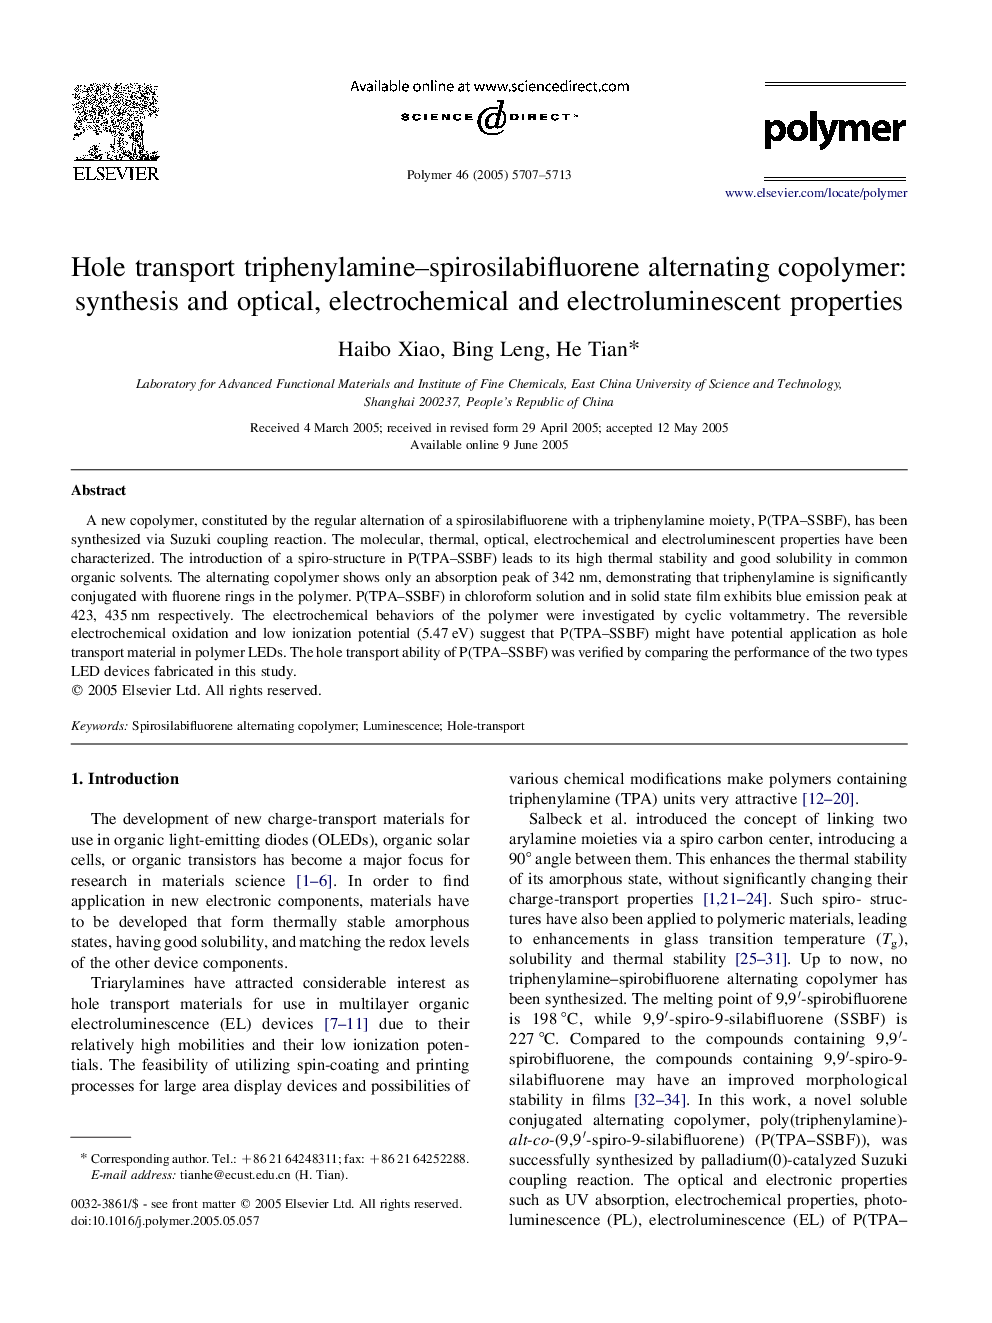 Hole transport triphenylamine-spirosilabifluorene alternating copolymer: synthesis and optical, electrochemical and electroluminescent properties